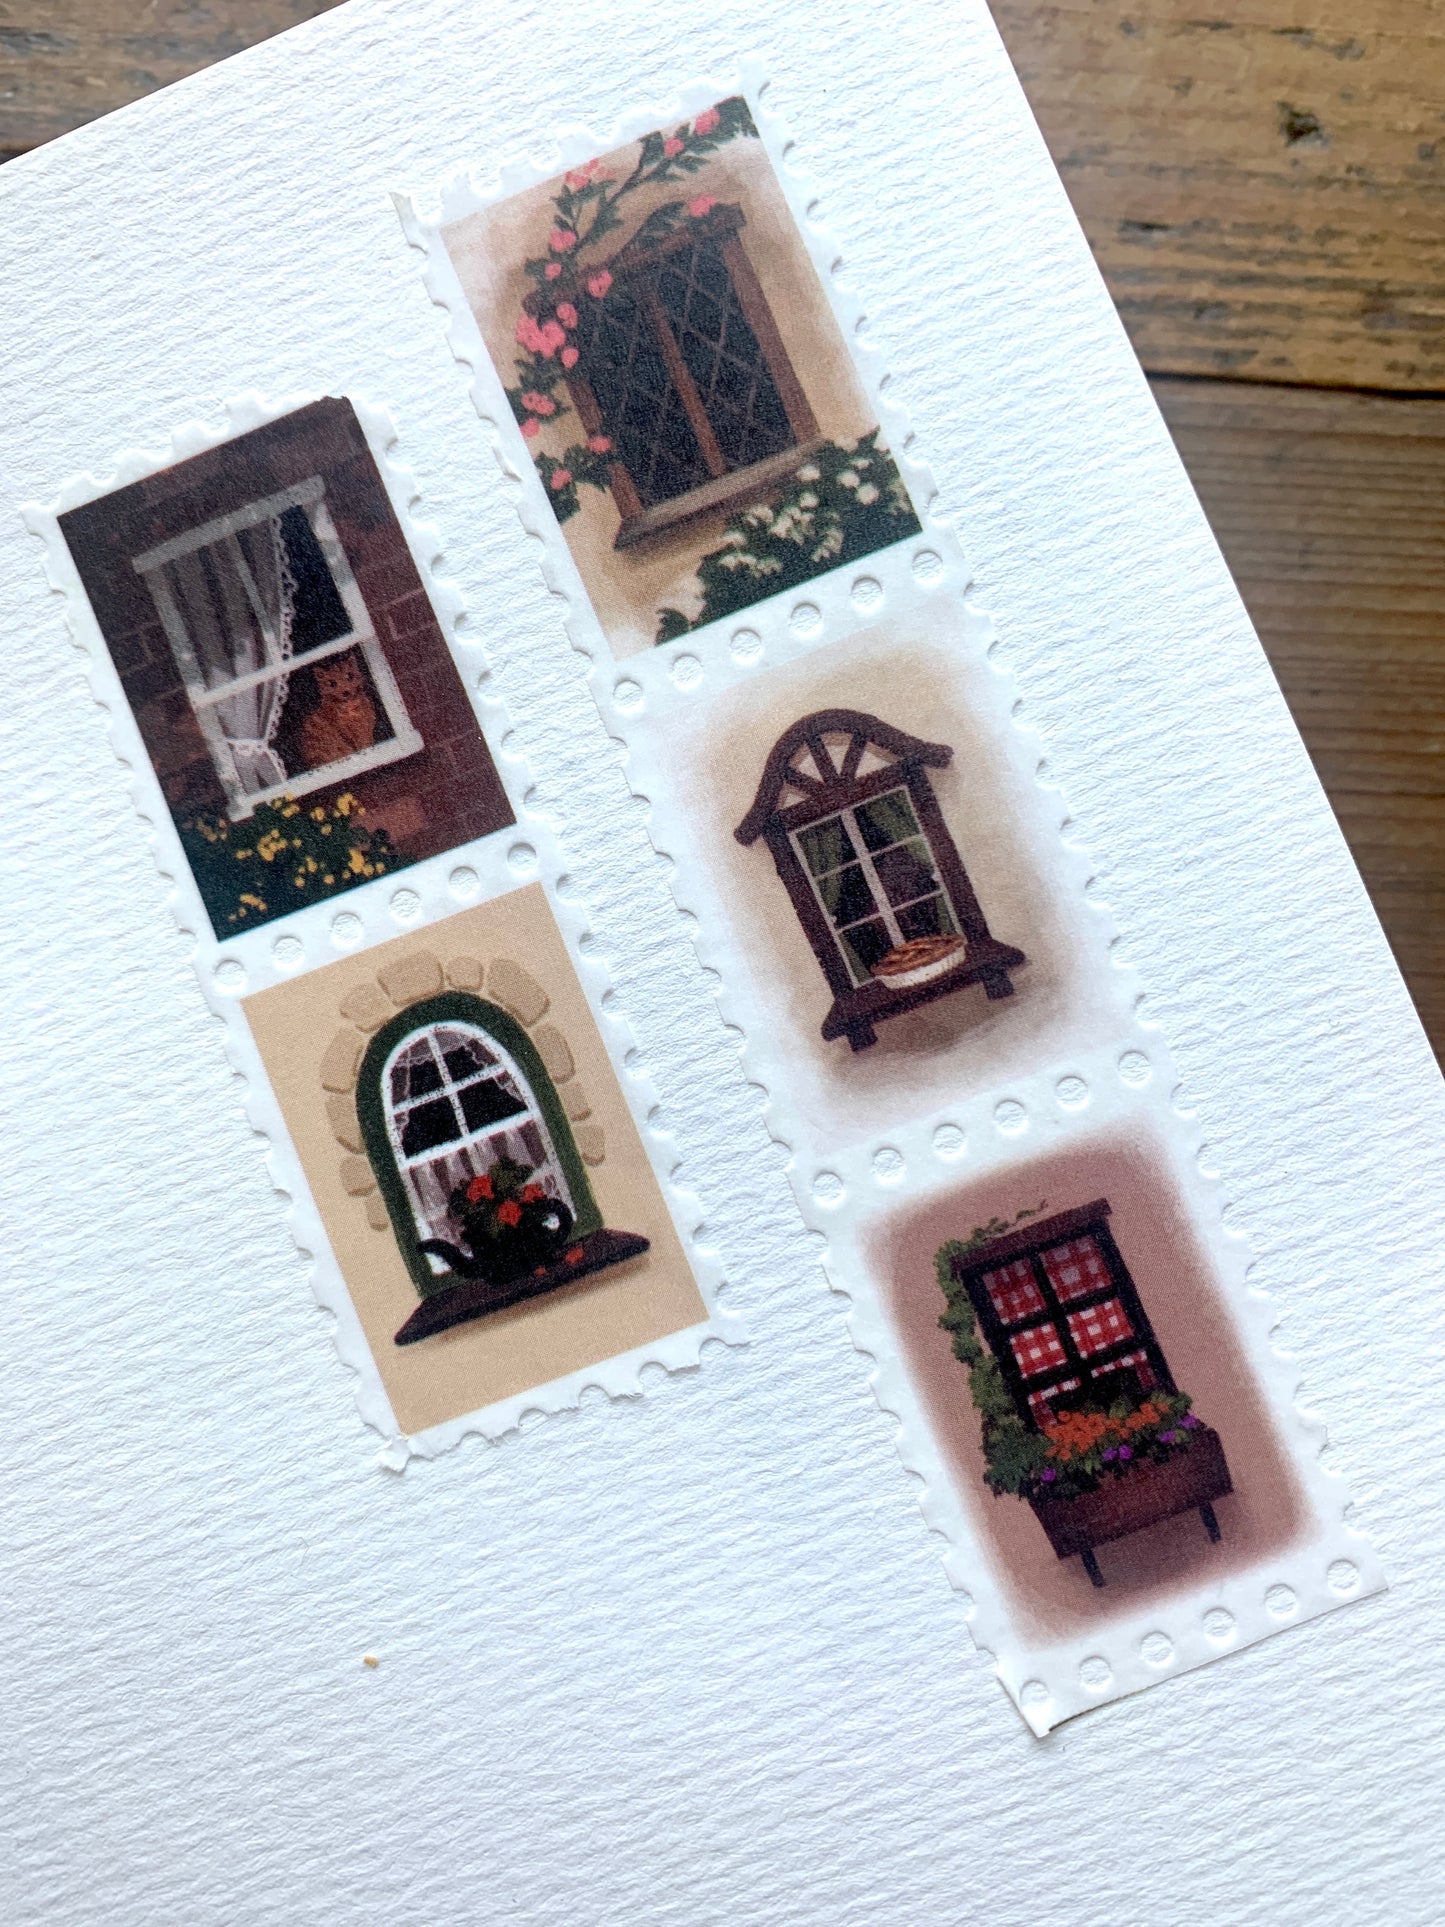 Cottage windows stamp washi tape - The Washi Station collab